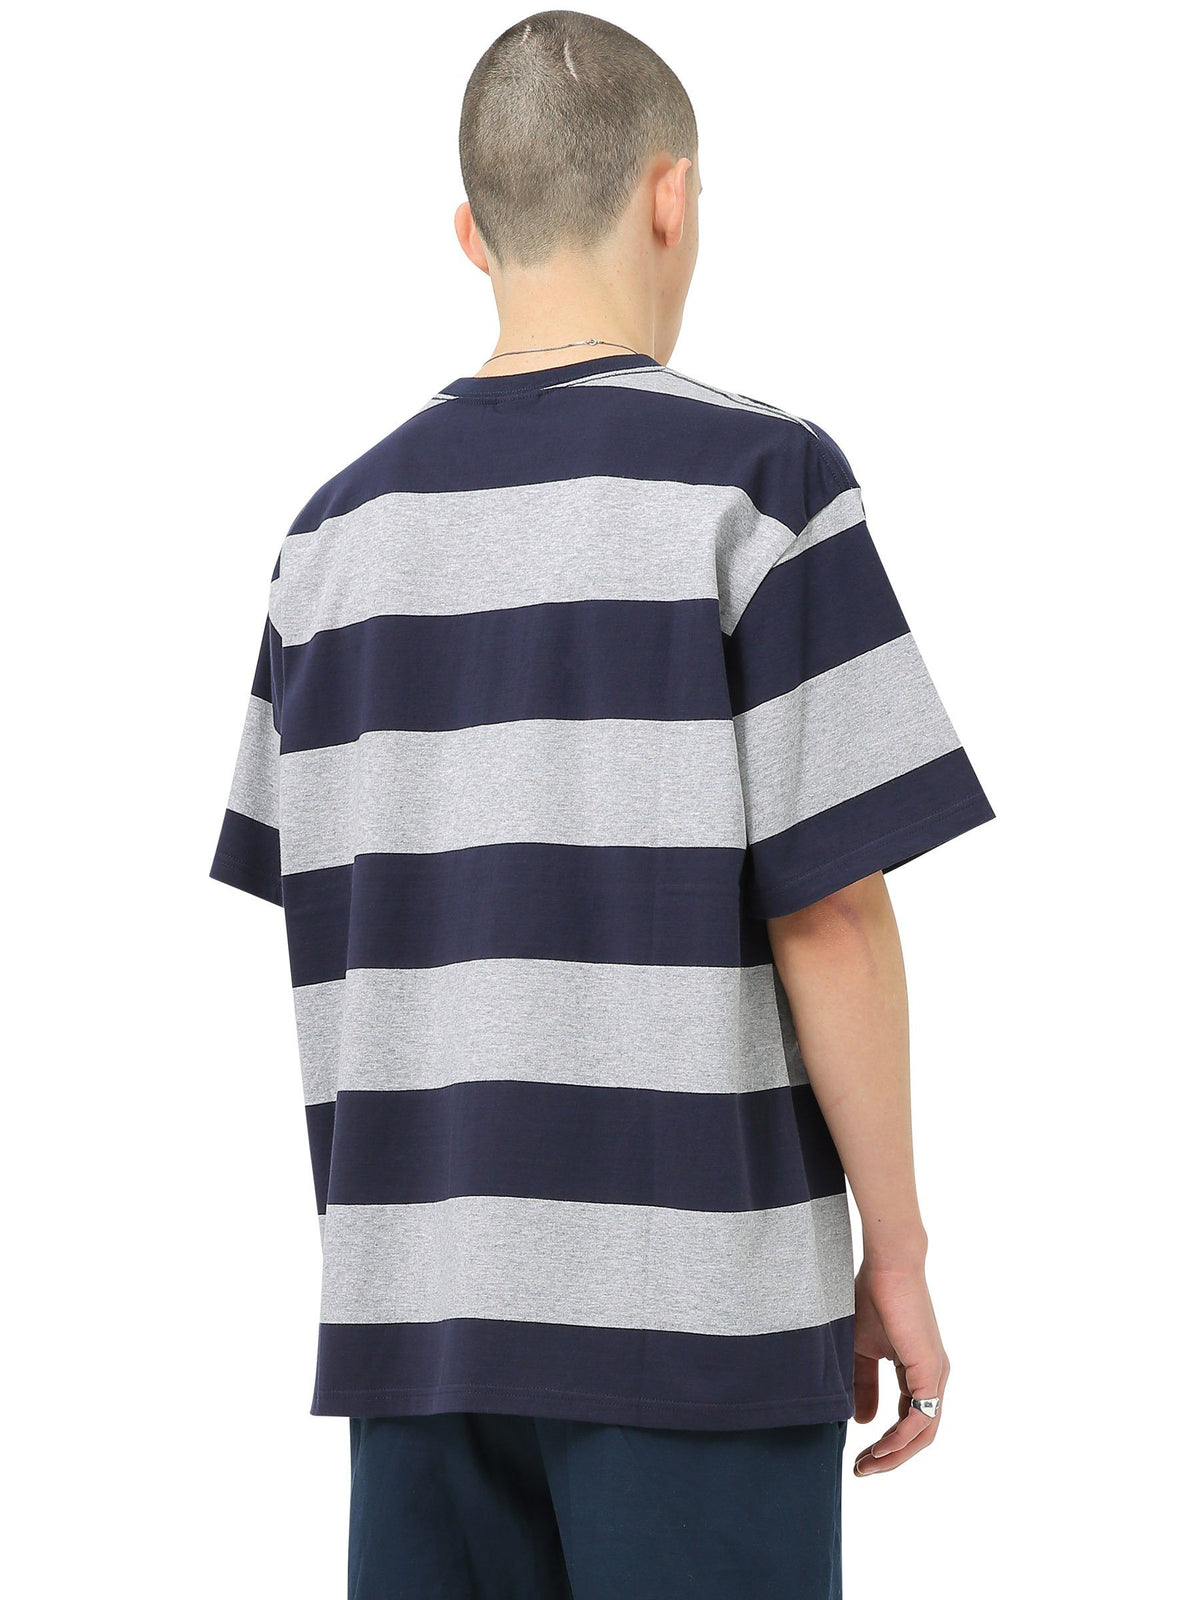 SP-Logo Striped Tee T-Shirt 